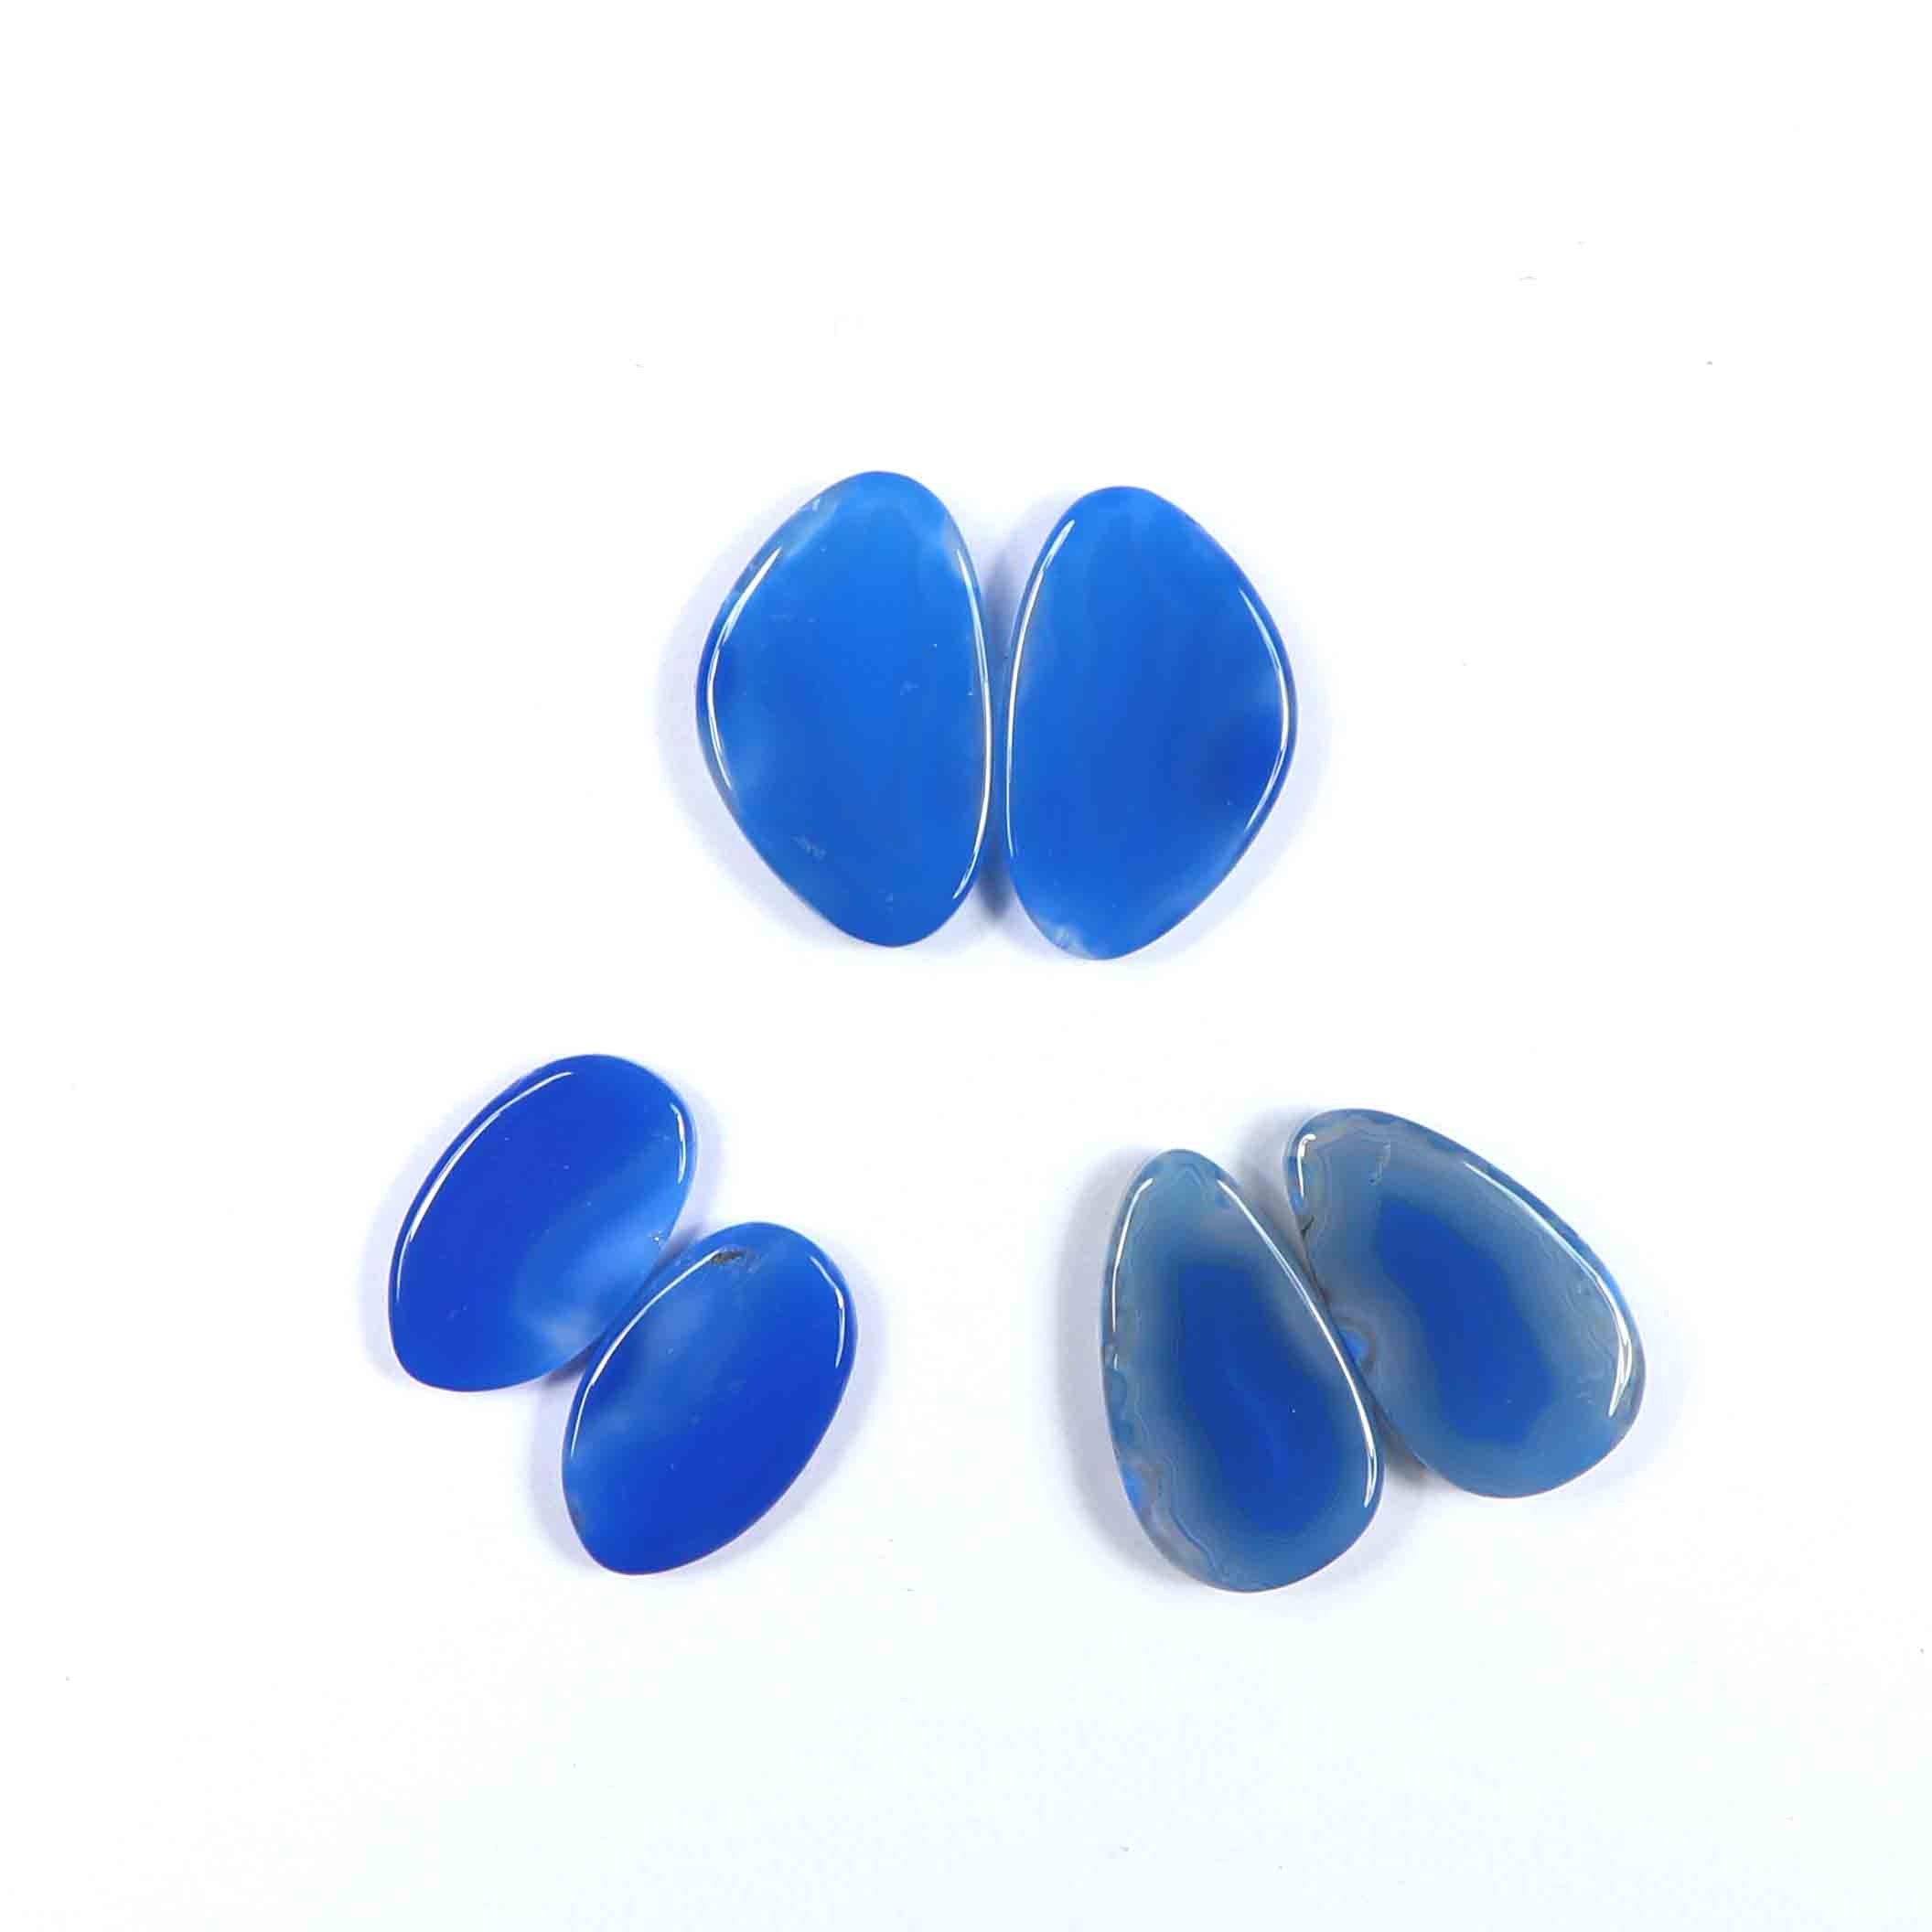 Superb Blue Botswana Agate Gemstone 3 Pair Slice designer | Etsy